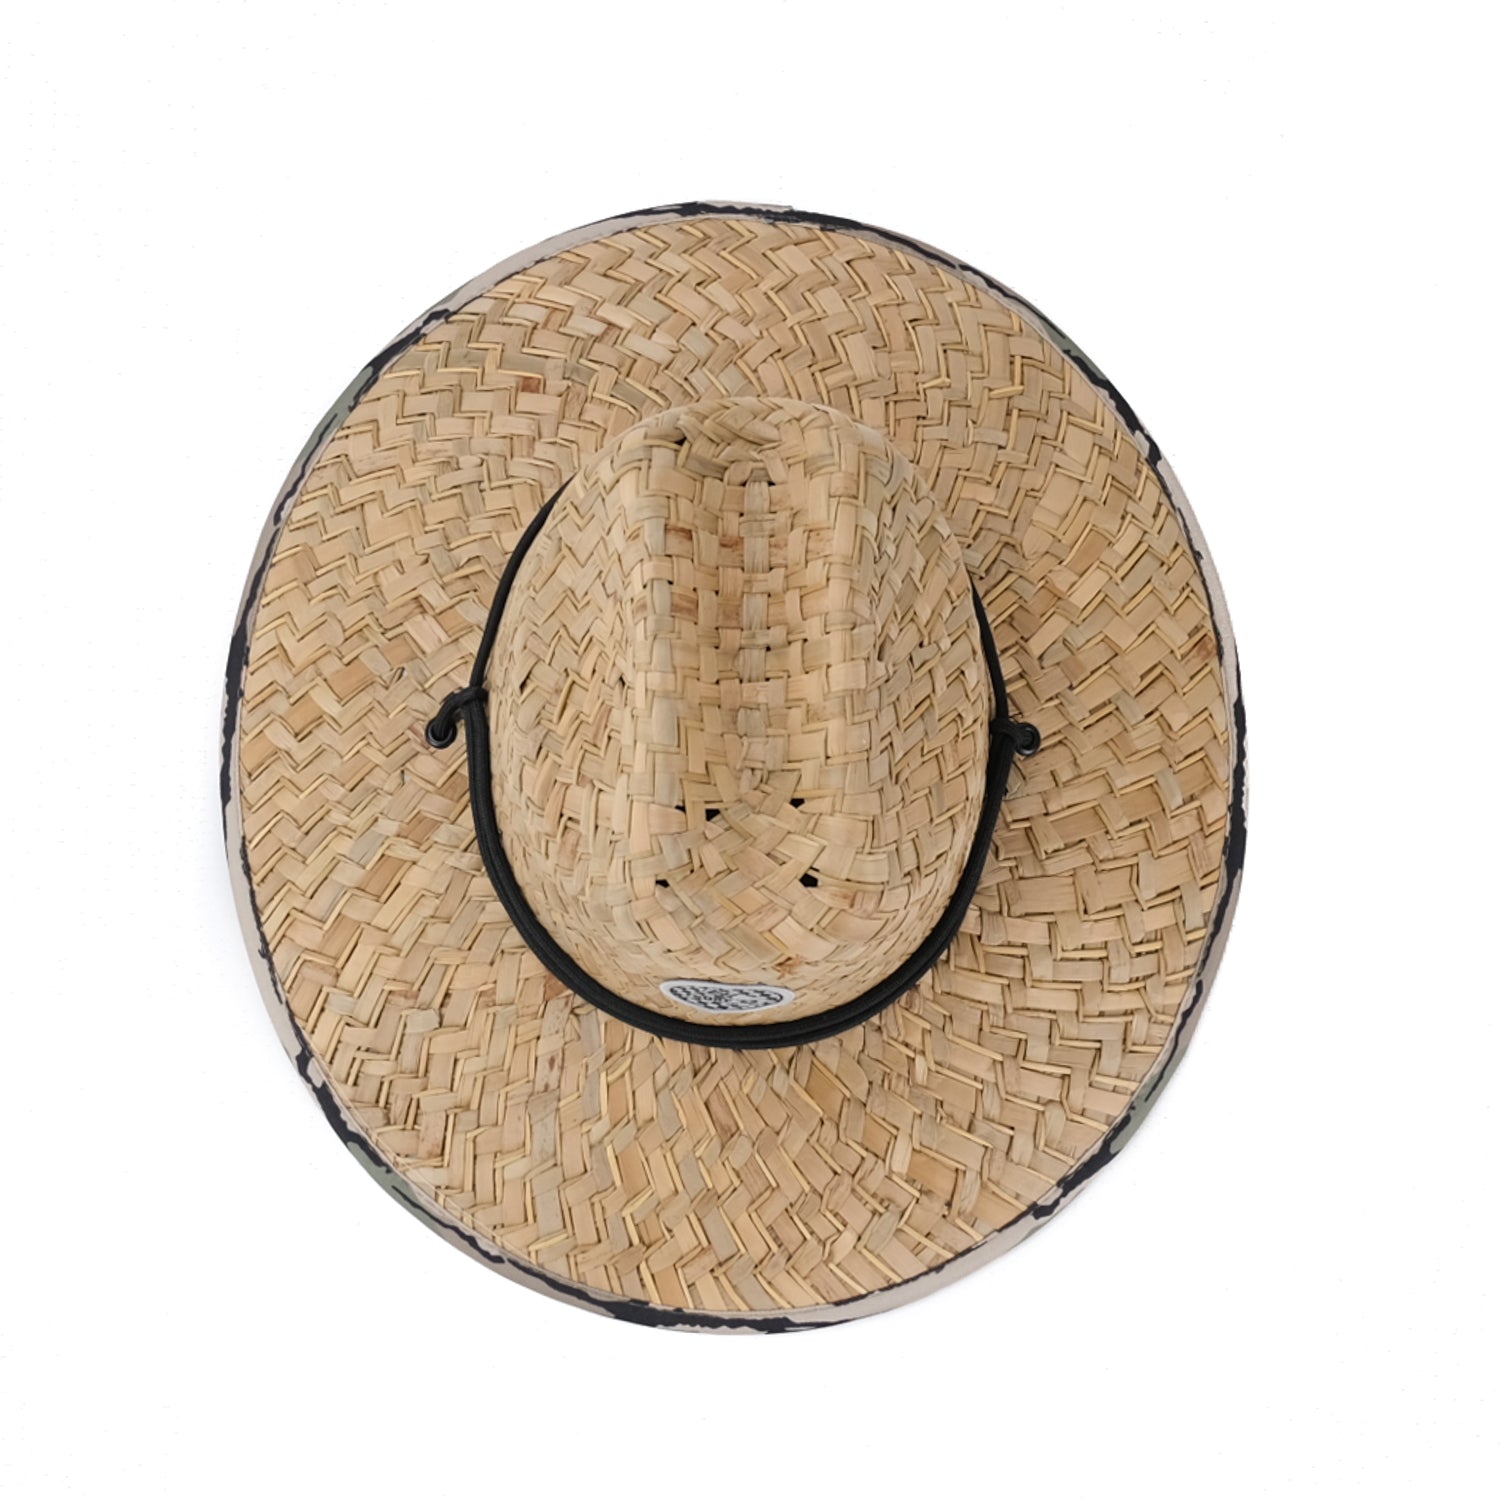 MOD Vacay Straw Hat - Camo